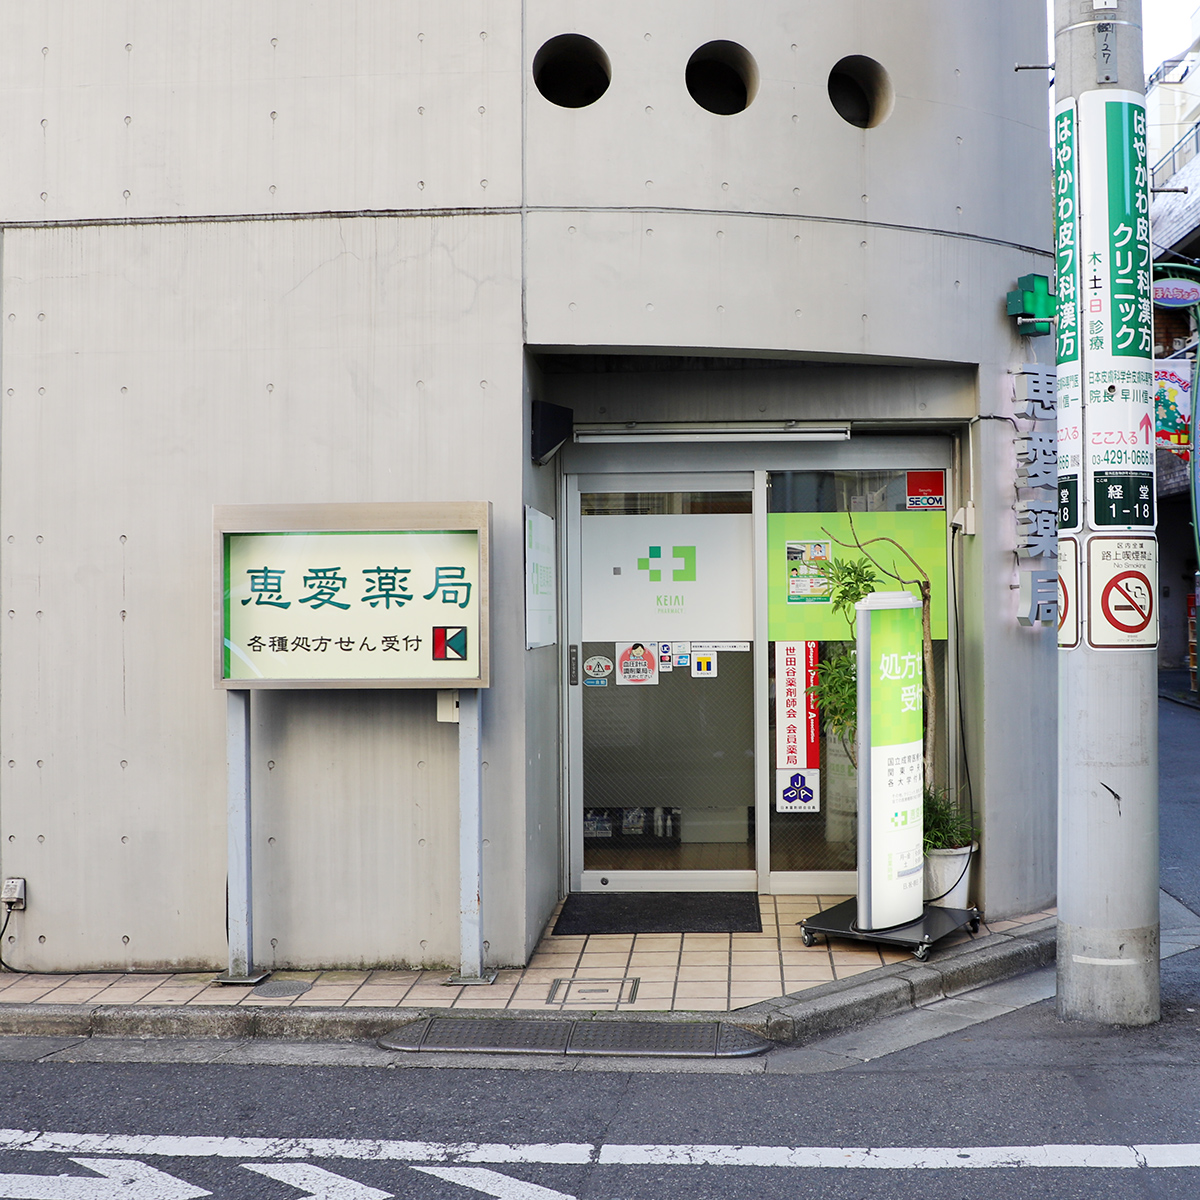 Keiai Pharmacy Kyodo